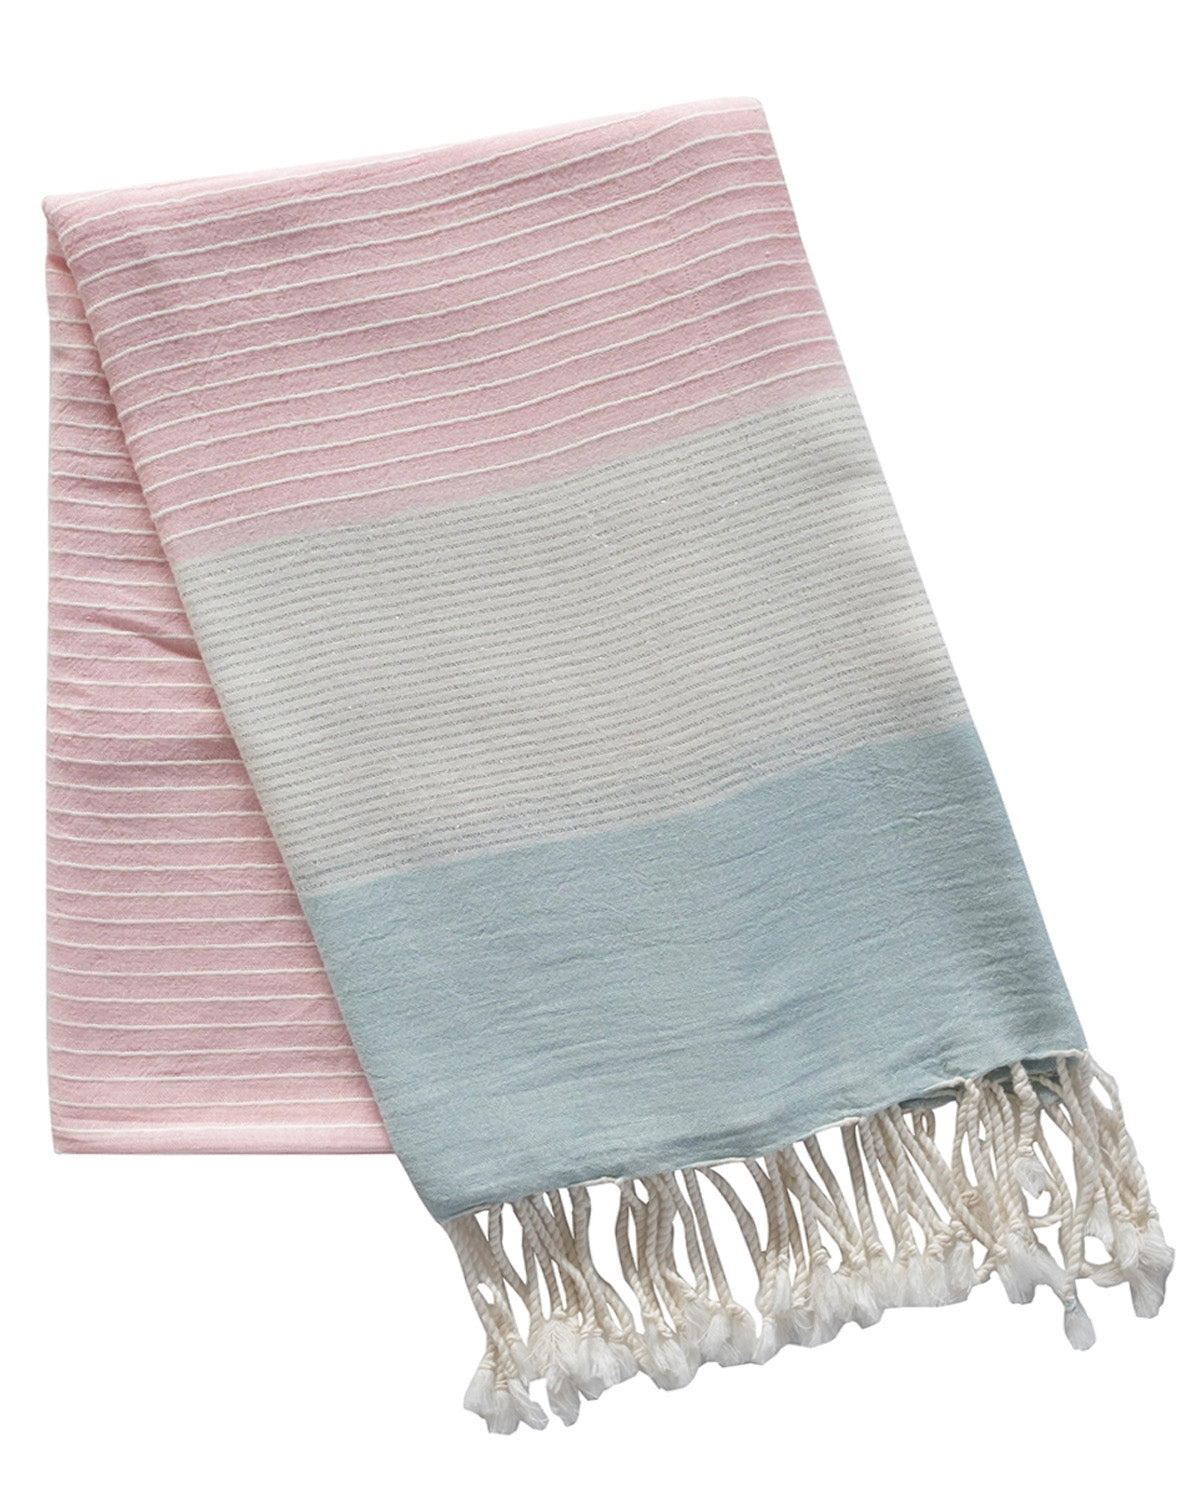 Lotus Cotton Peshtemal Towel - Pink & Mint